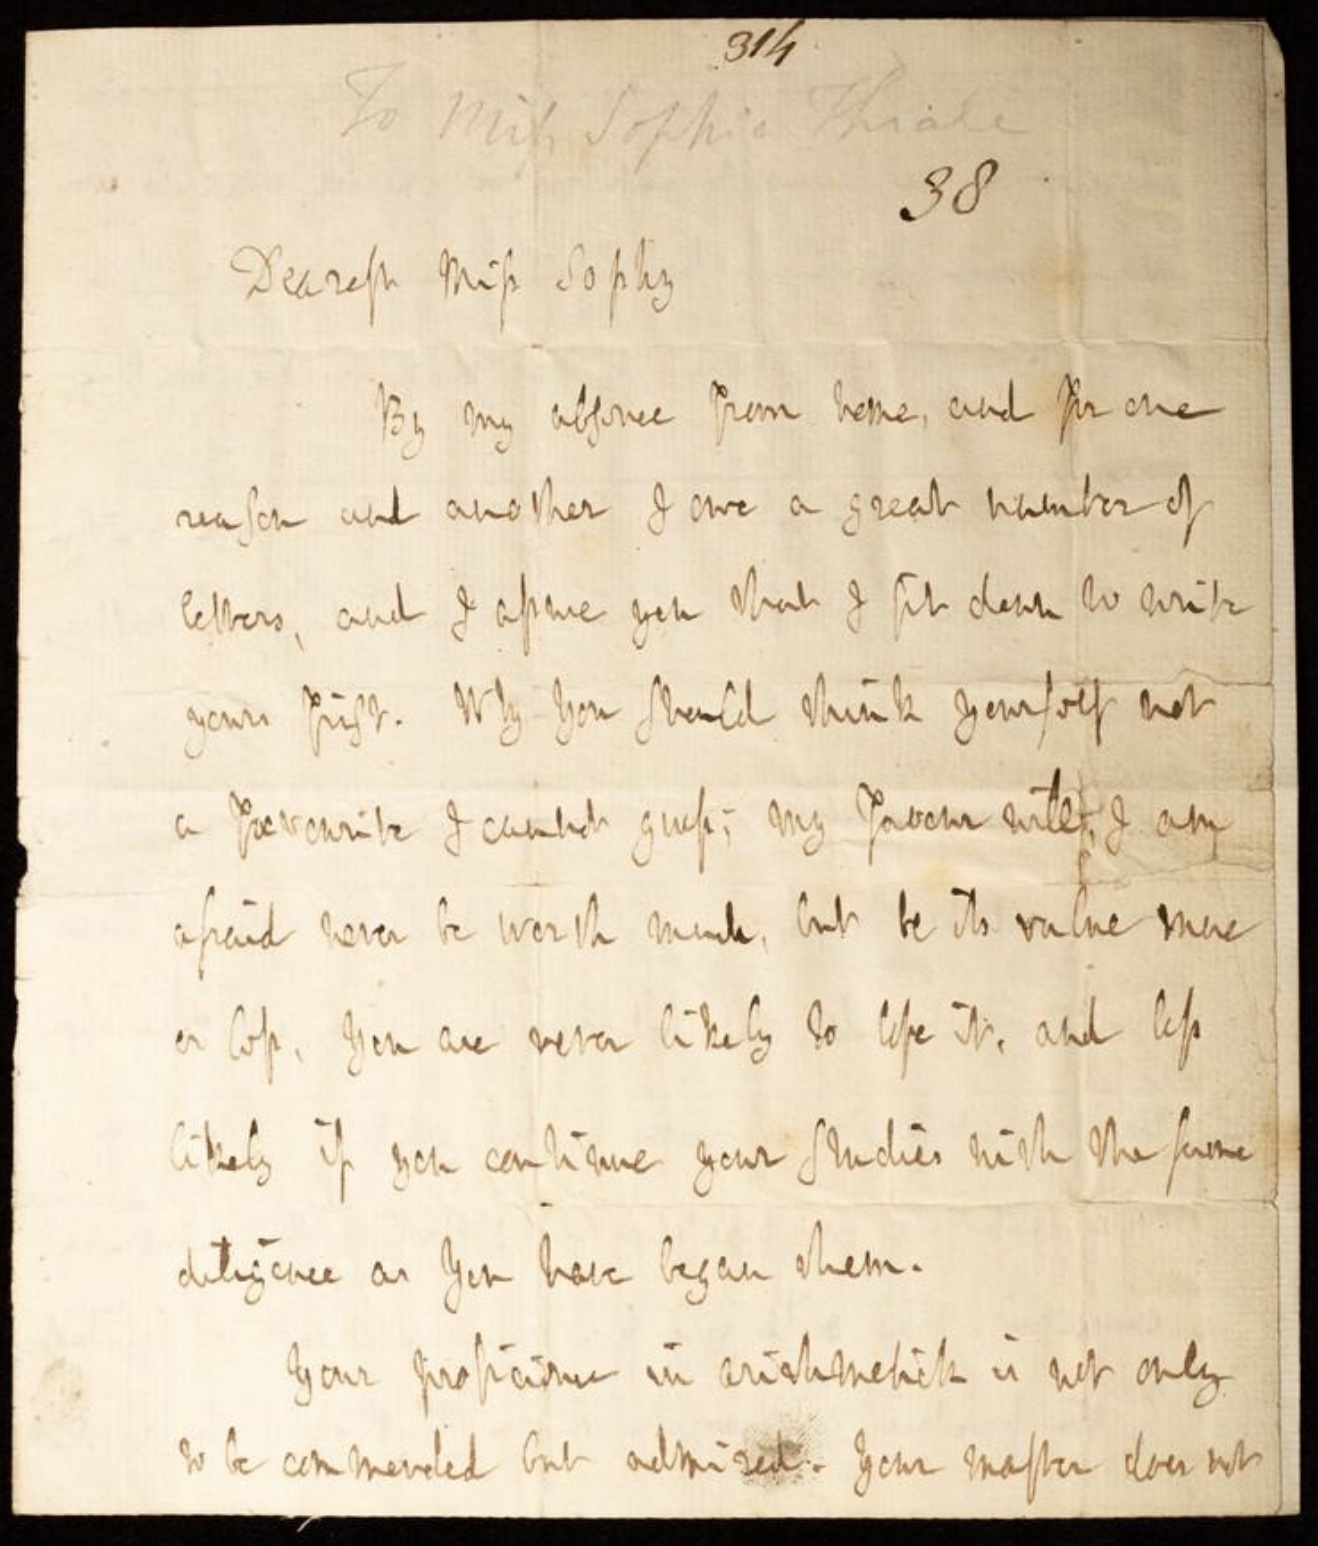 A letter written by Samuel Johnson